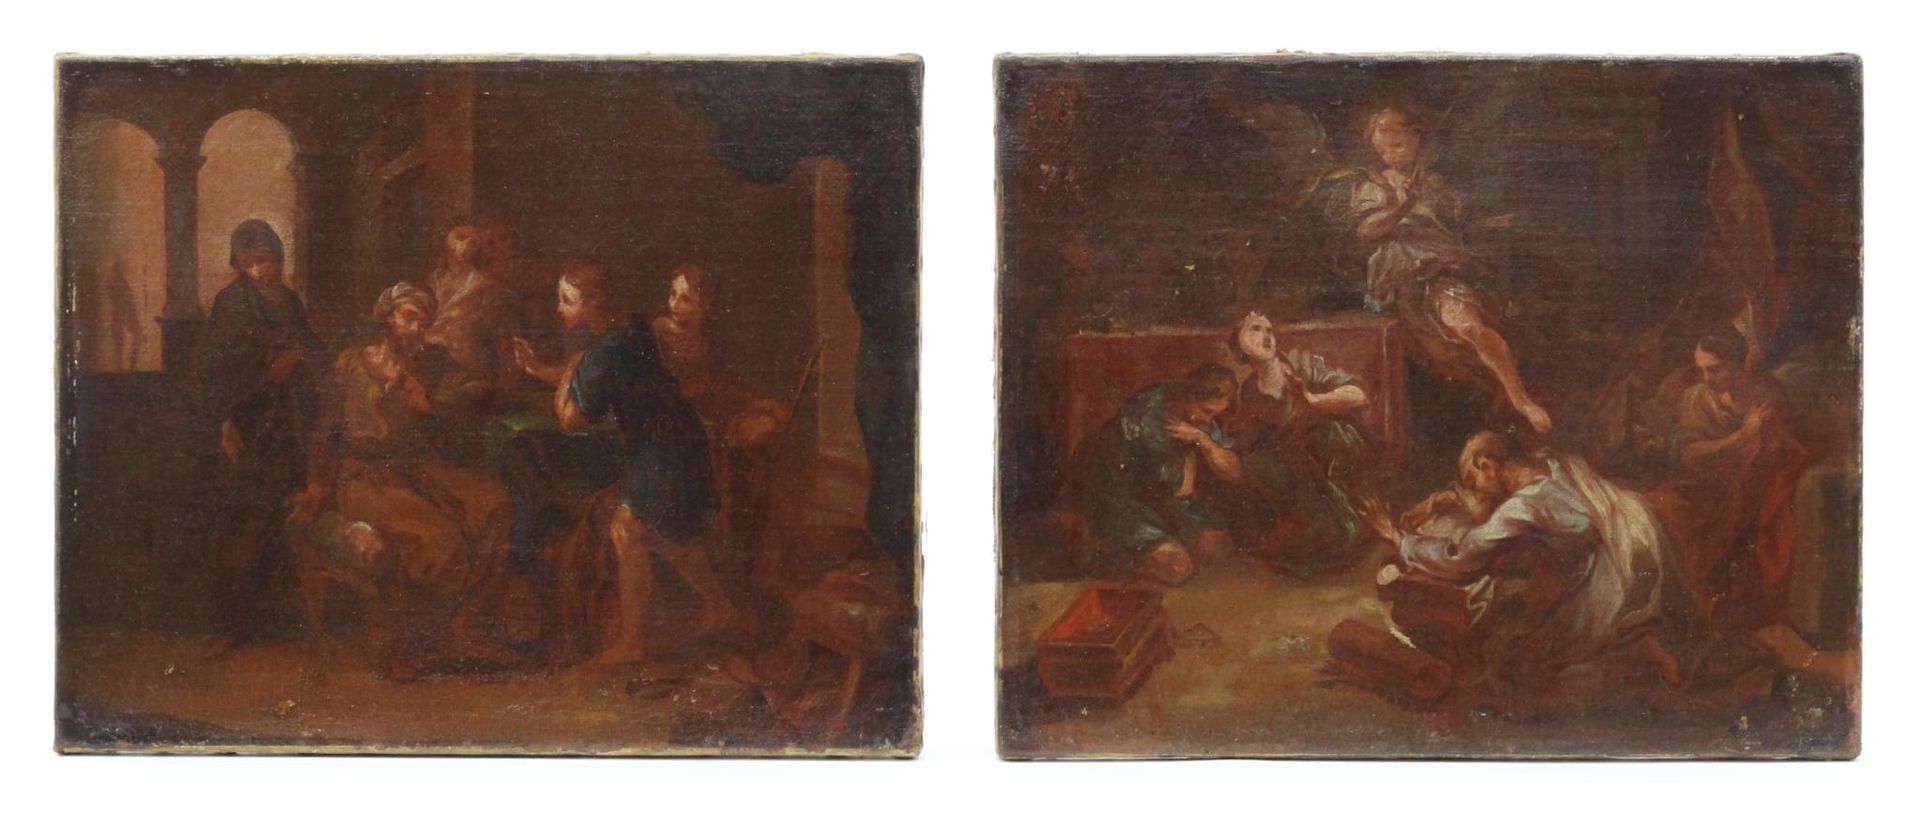 Null 皮埃尔-帕罗切尔（1670 - 1739）
拉斐尔天使的飞行和托比亚斯为父亲复明
一对画作
高：32 厘米
宽：40 厘米
小部分缺失

这两幅草图与&hellip;